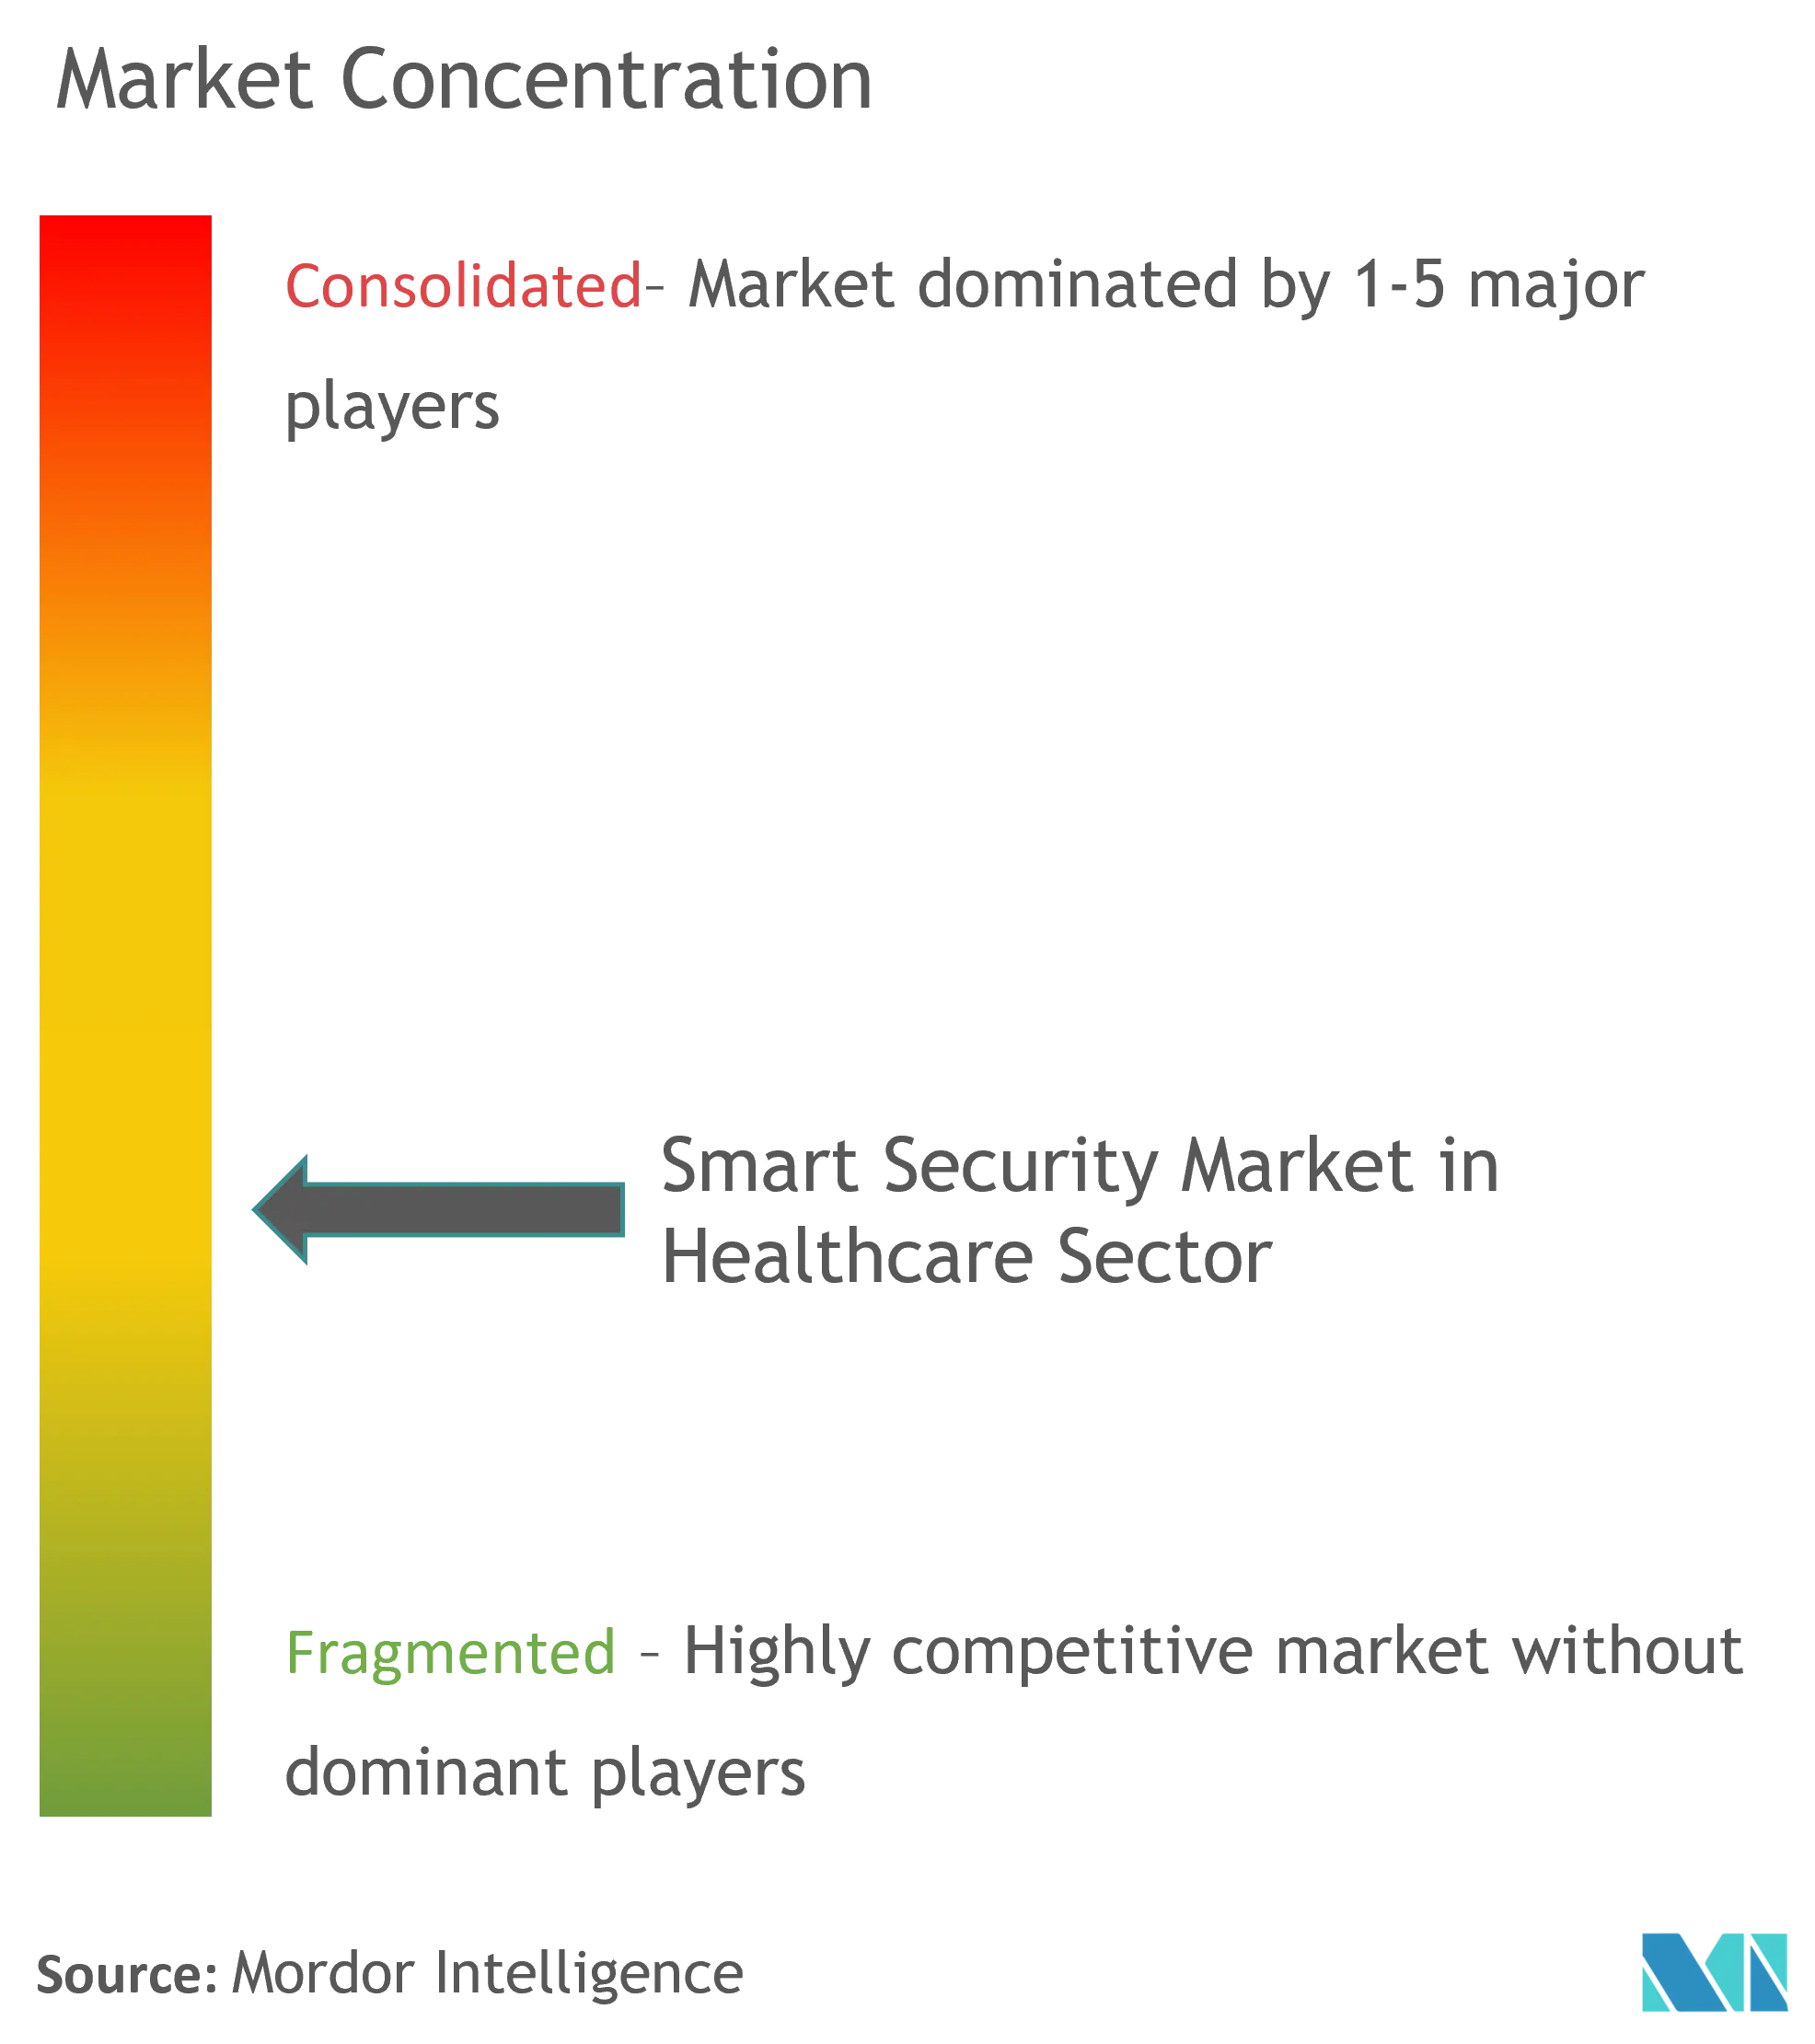 Smart Security Market Concentration